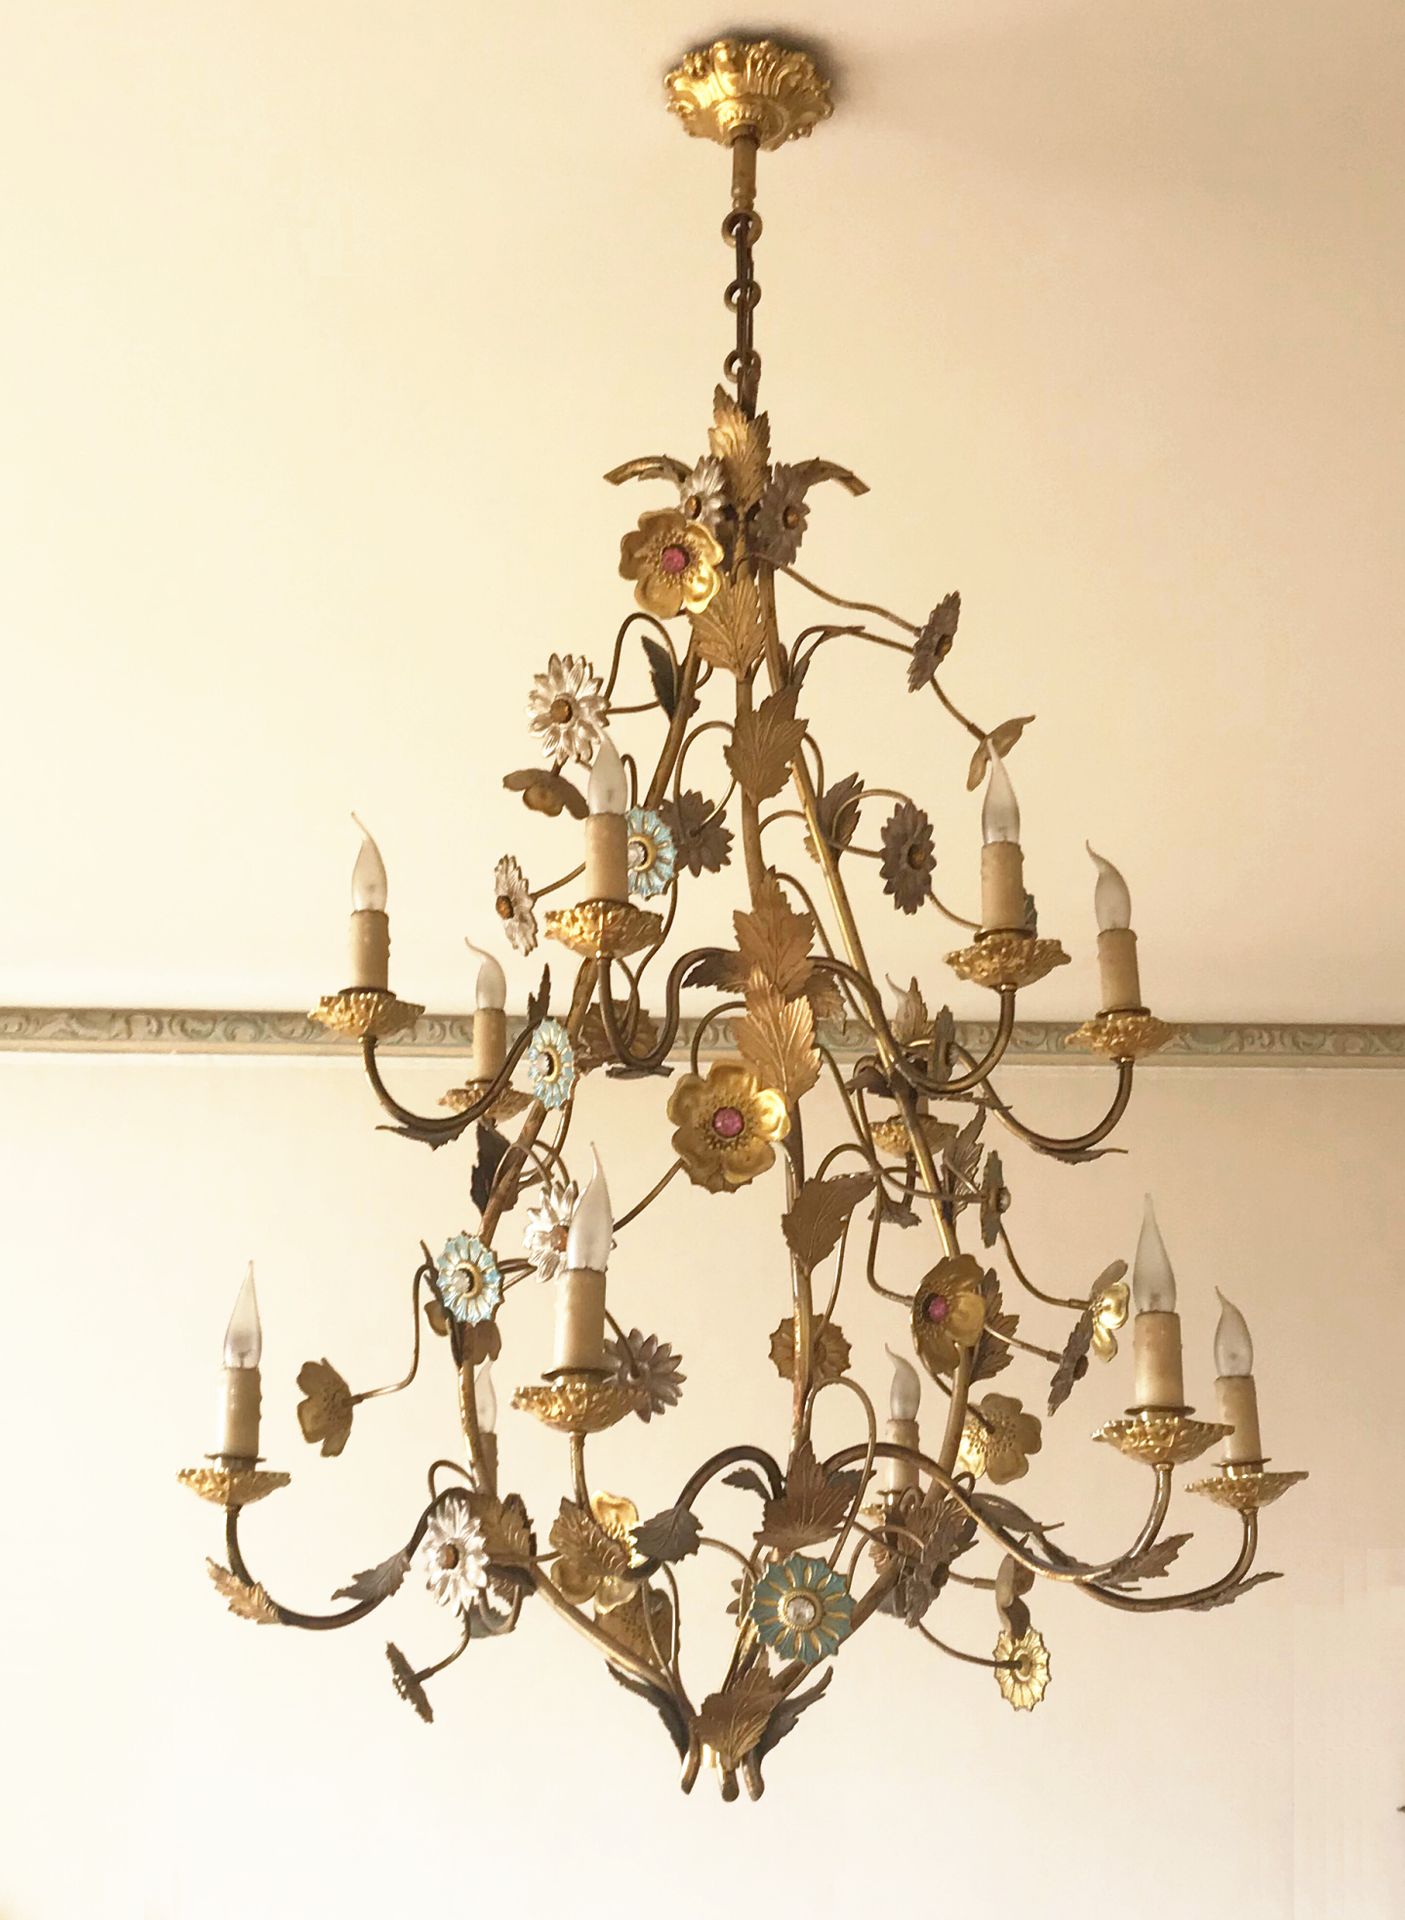 Maison JANSEN 归属于詹森家族的作品

十二臂鎏金金属吊灯，以玻璃凸面体为中心，饰有叶子和花朵。

18世纪风格

H.110厘米；D.：65厘米